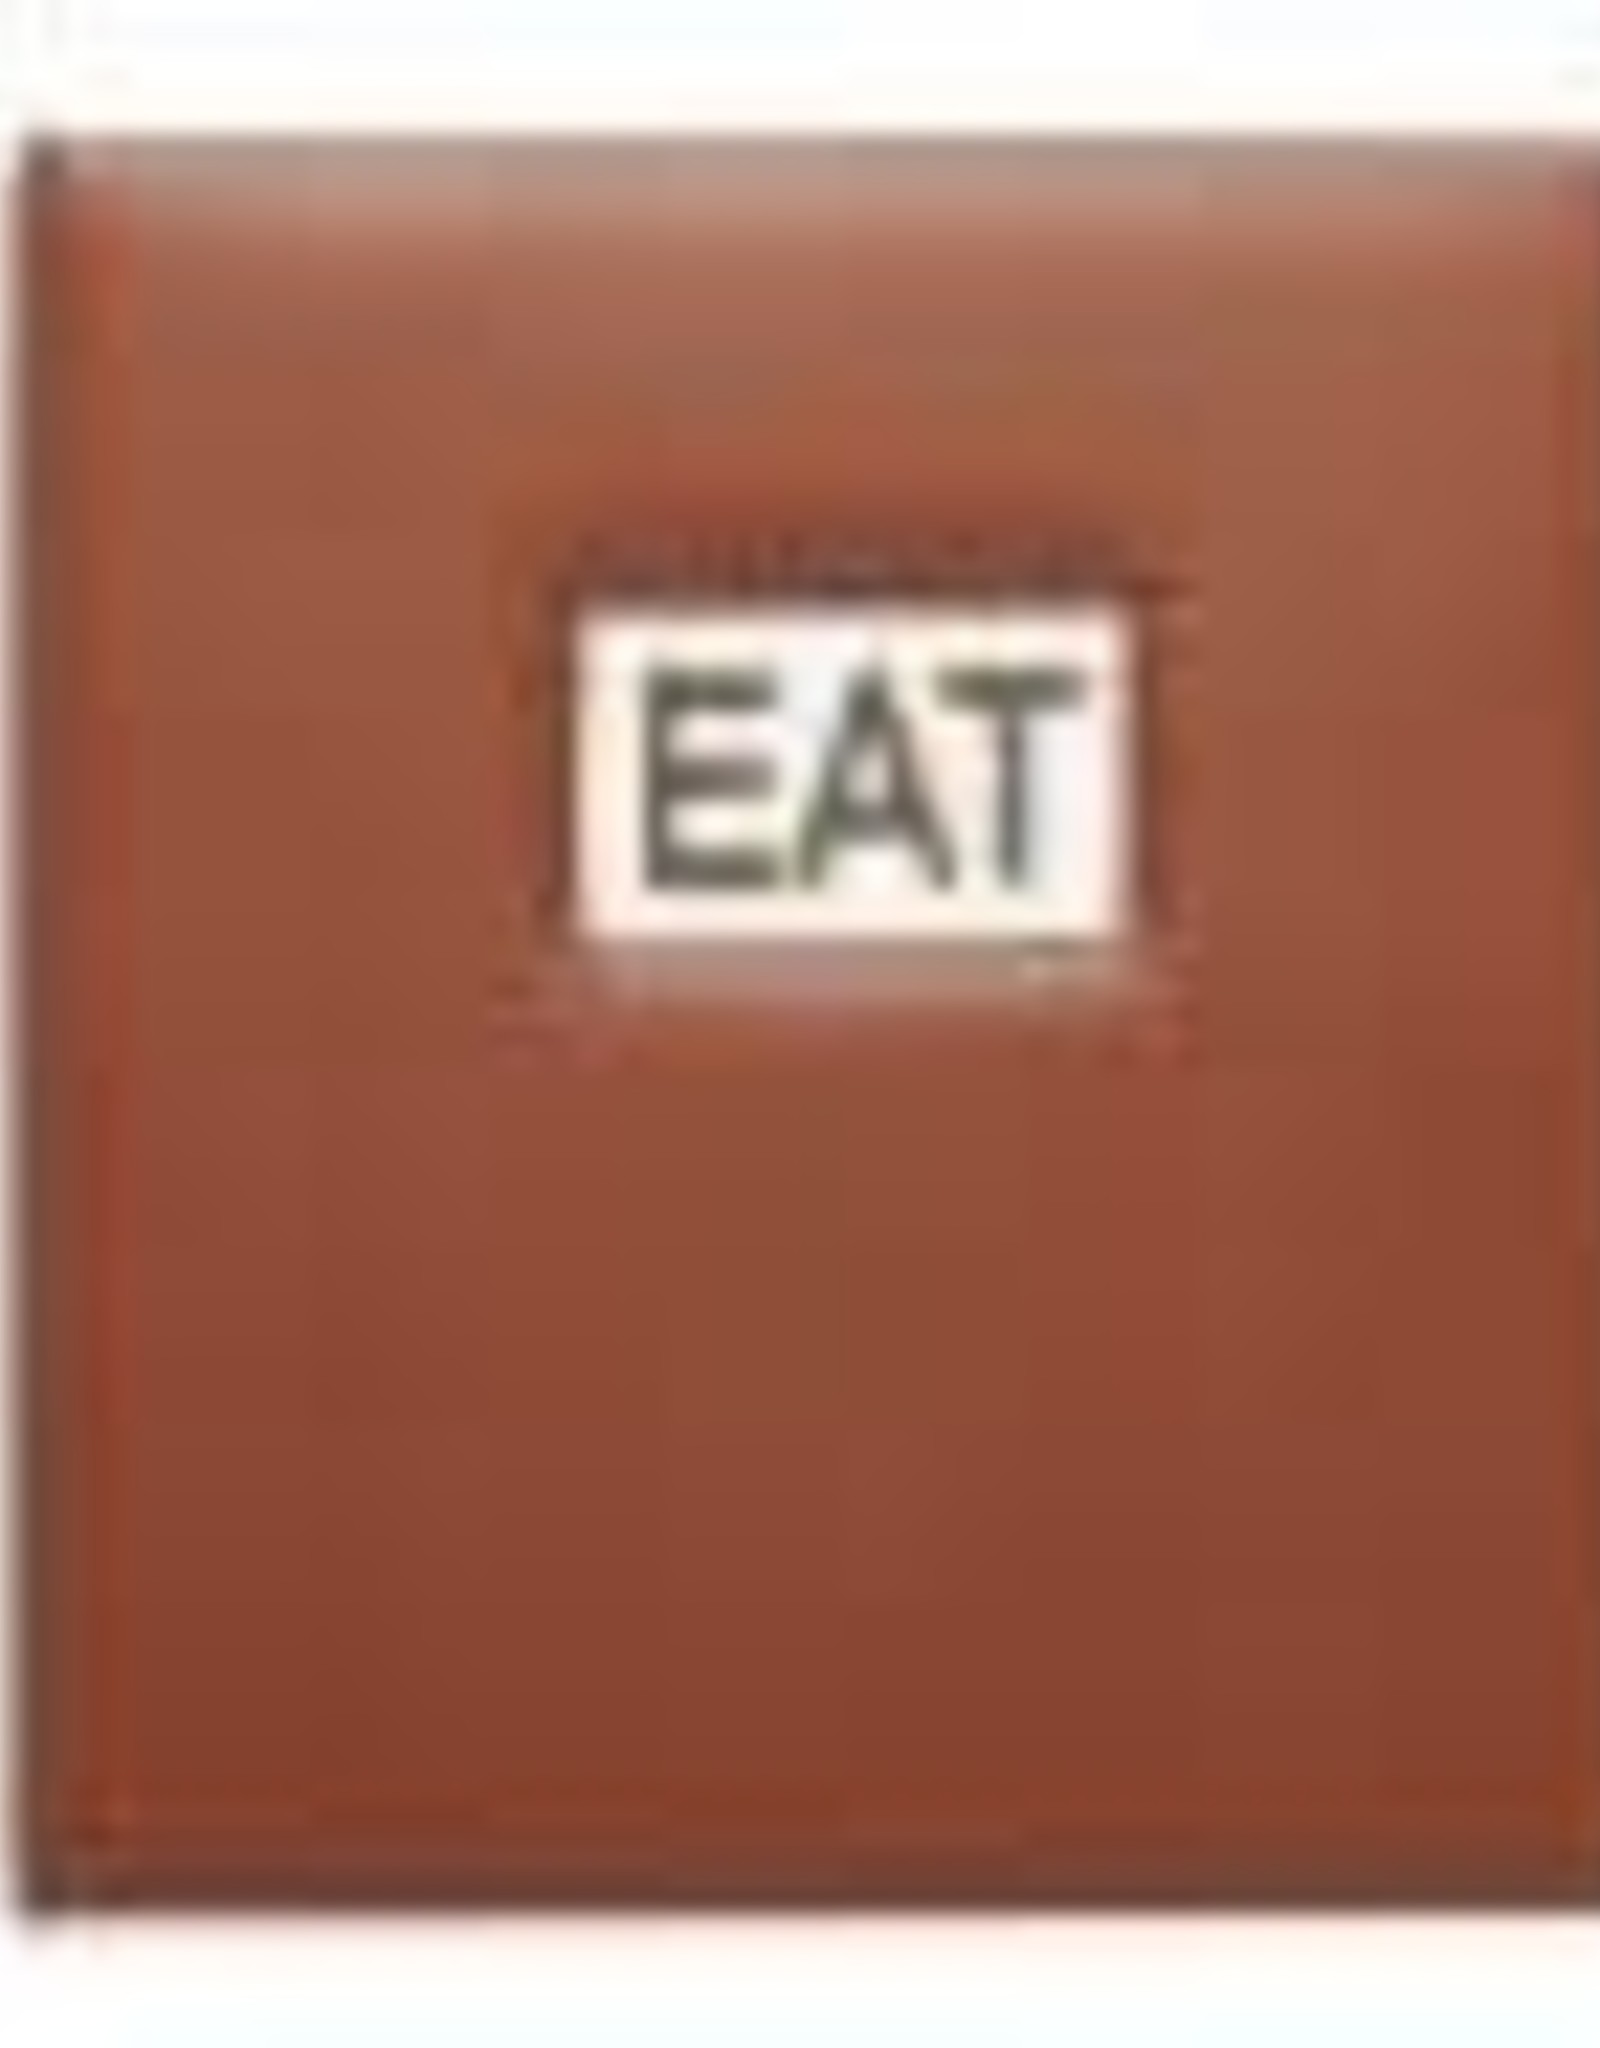 Pocket Page Recipe Book (Eat)